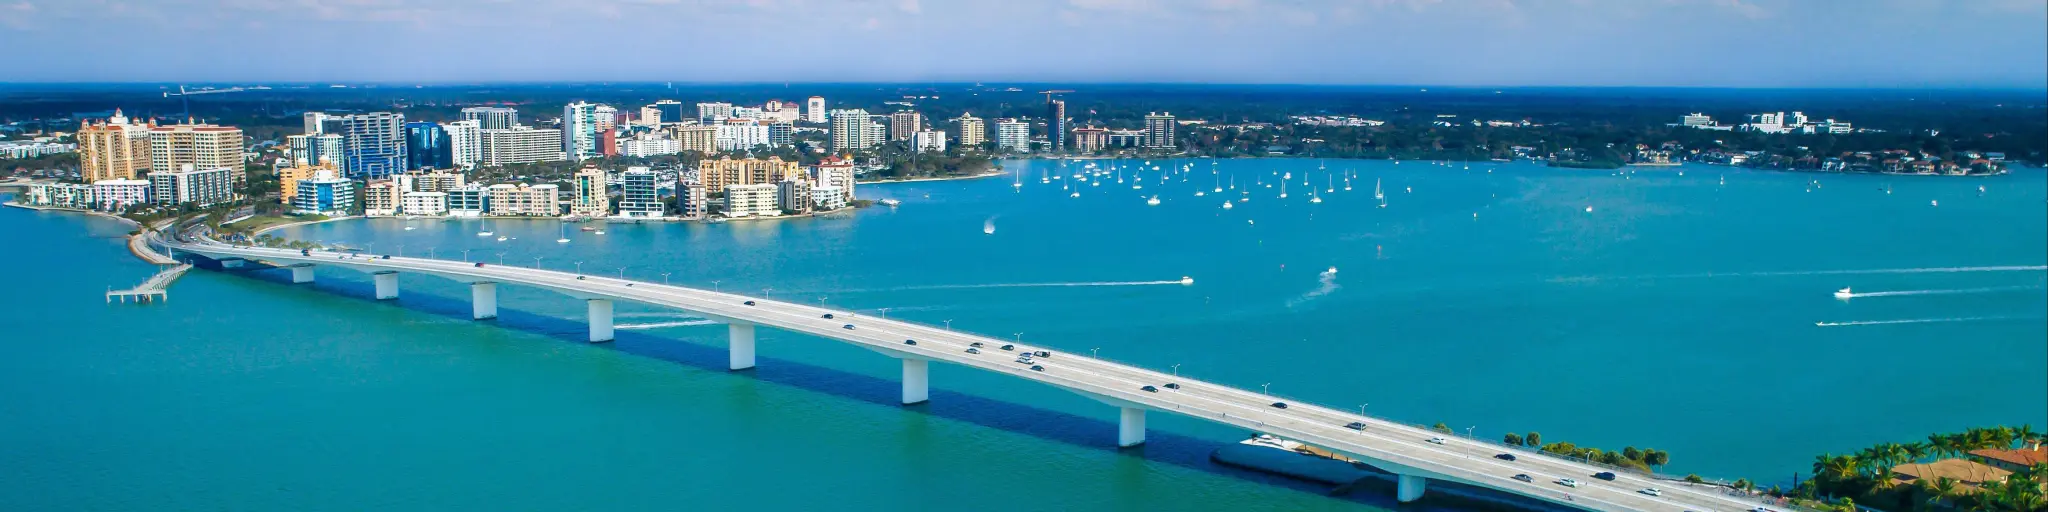 Ringling Bridge Downtown Sarasota Drone Panorama. Sunny Florida with beautiful blue waters.